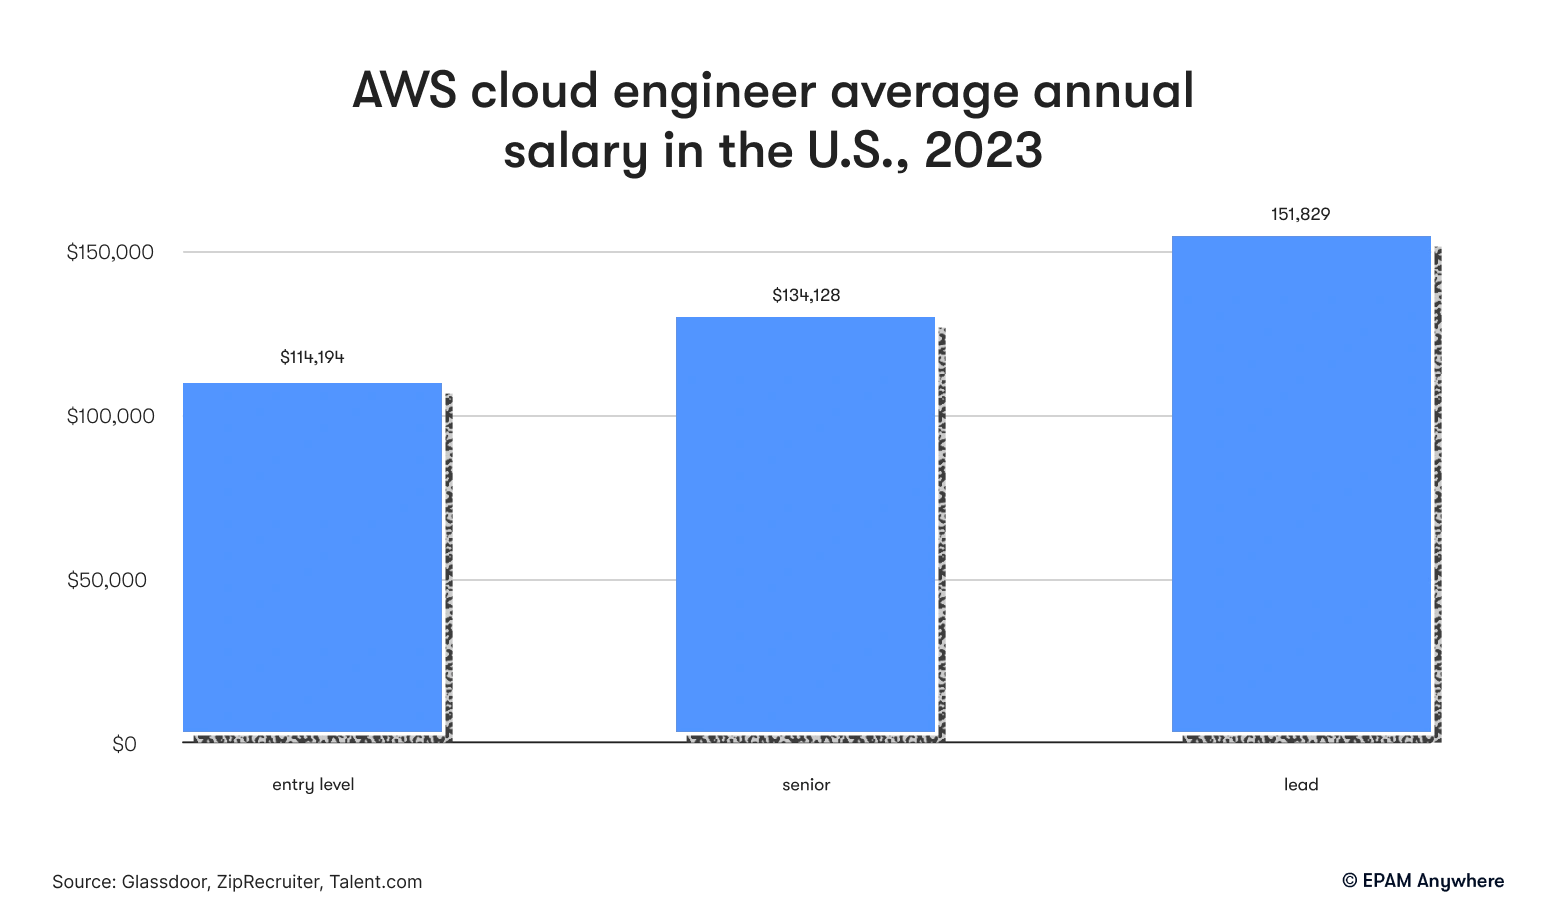 AWS cloud engineer average annual salary in the U.S., 2023